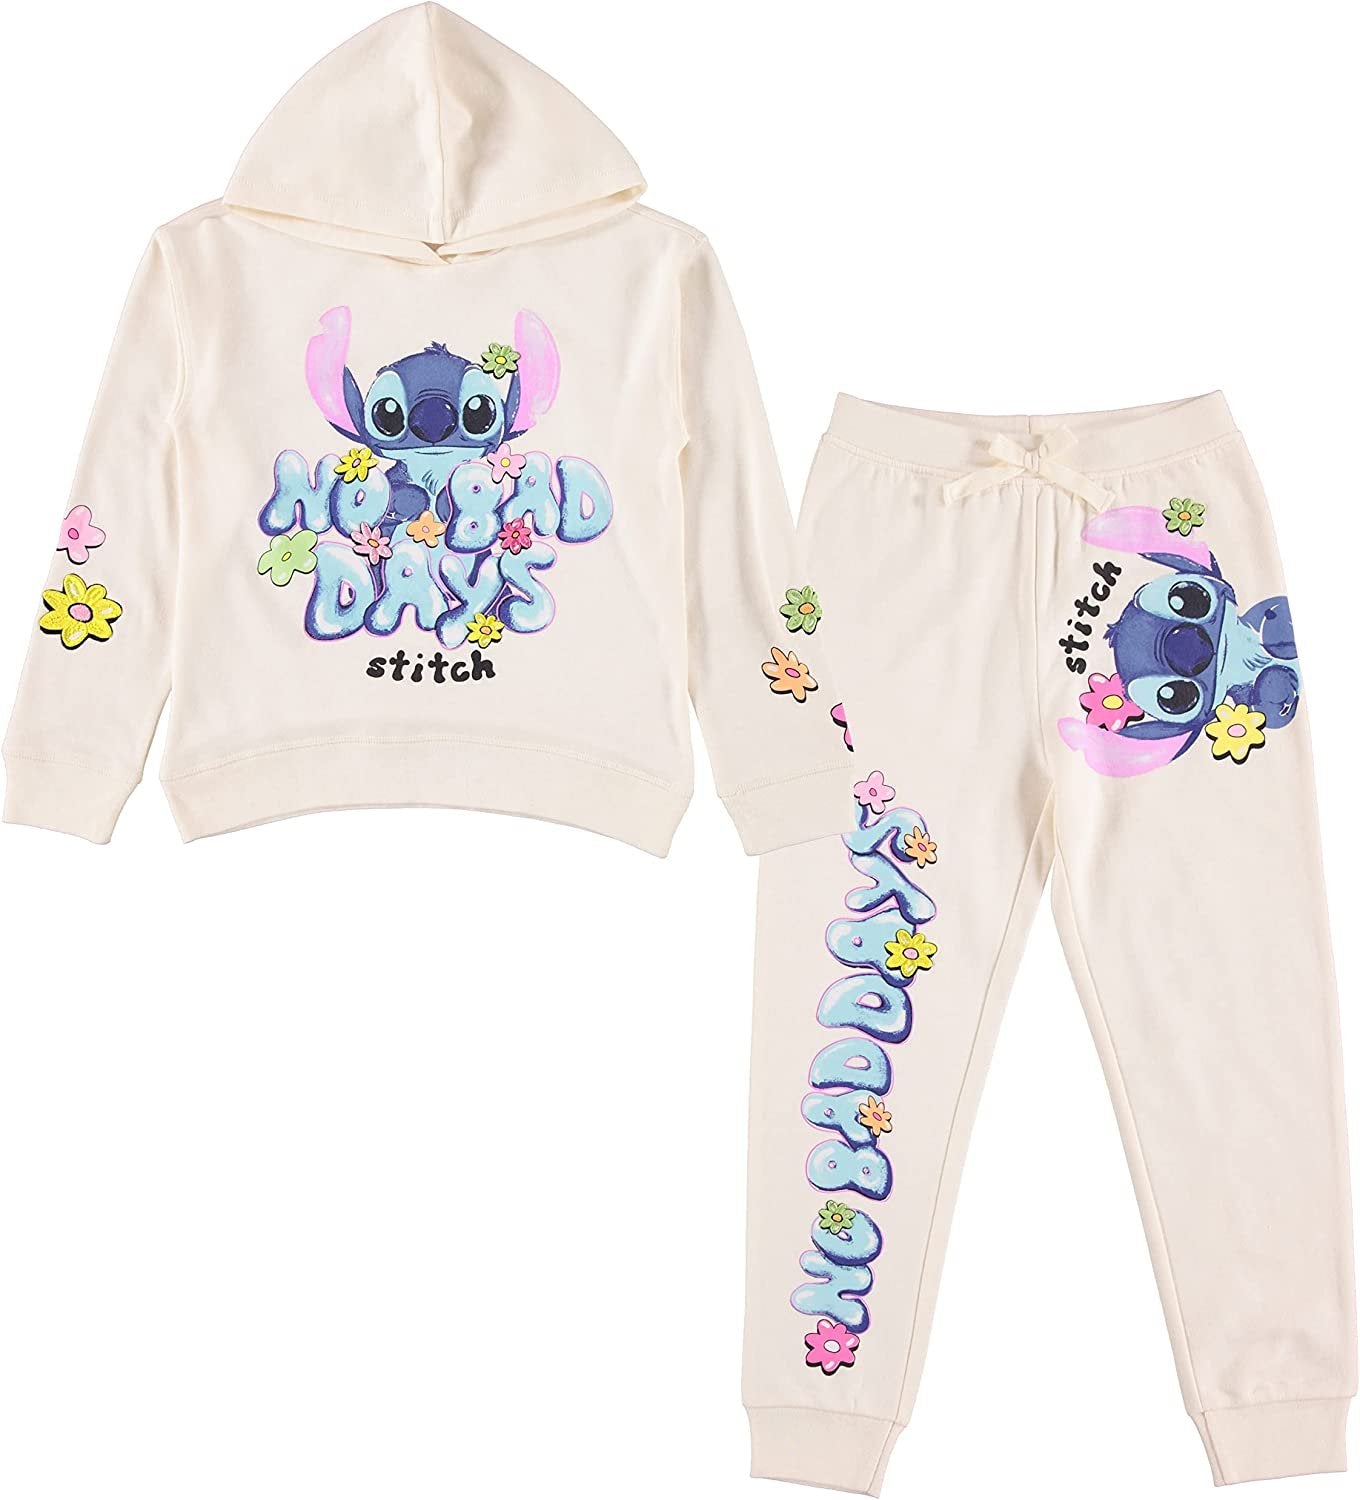 Disney Girls Lilo & Stitch Clothing Set - Stitch Sweatshirt Hoodie and Jogger - 2-Piece Outfit Set - Sizes 4-16